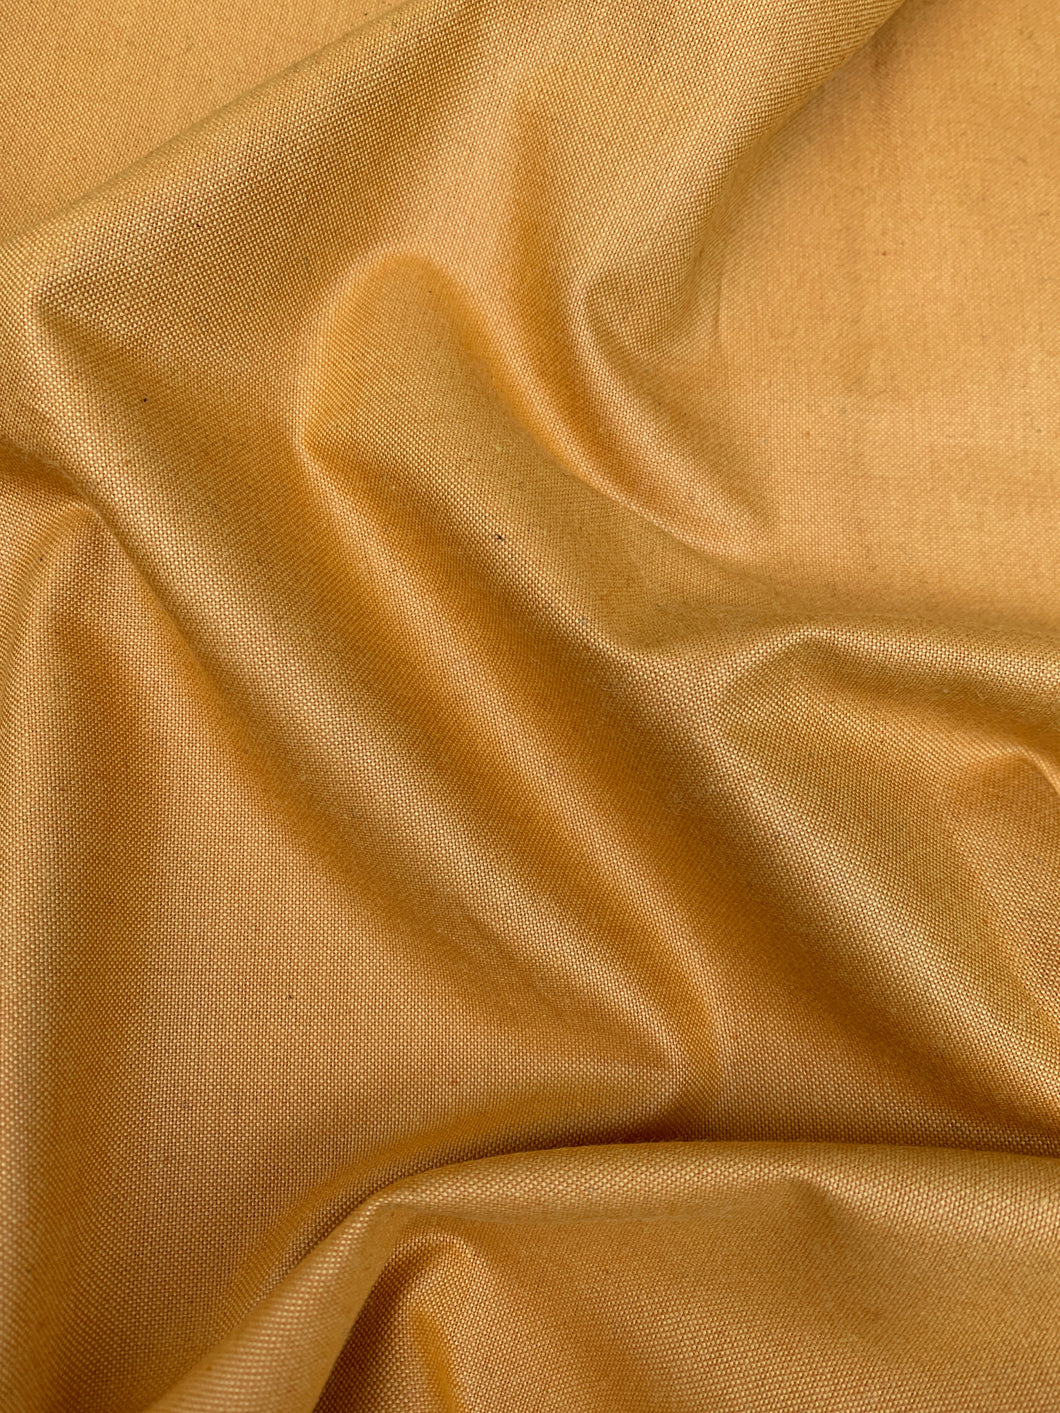 Peppered Cotton in Saffron